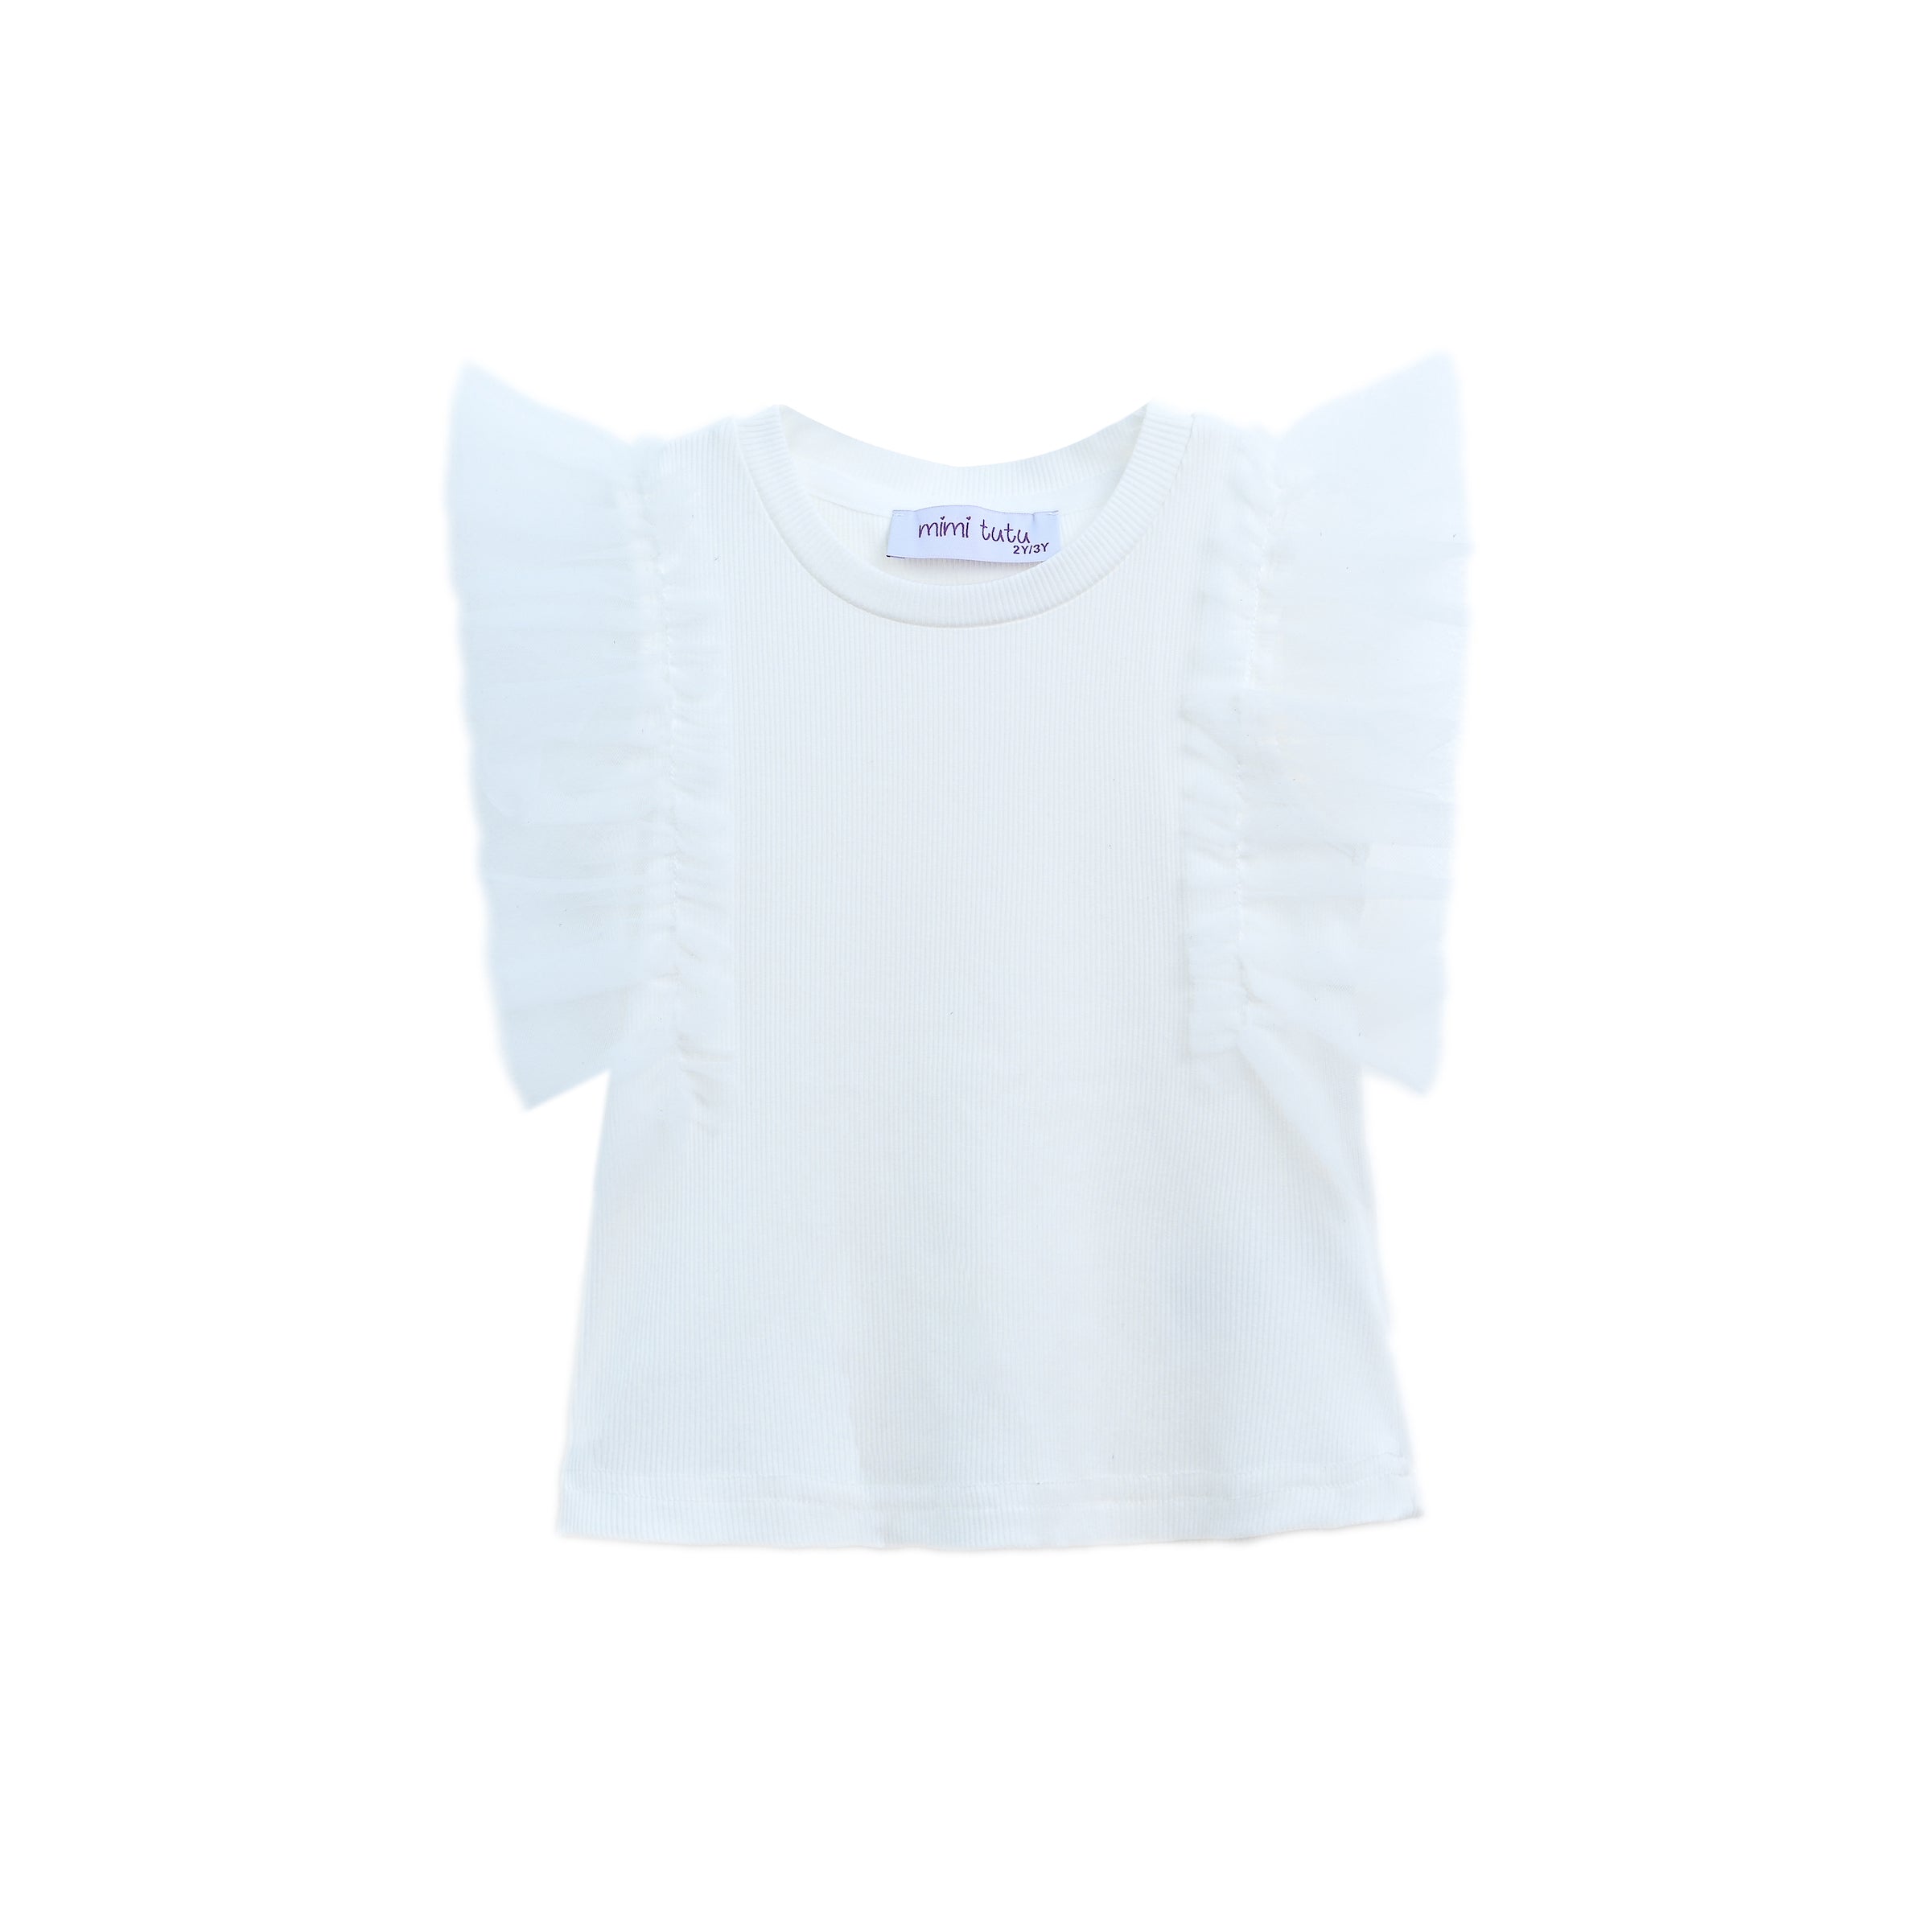 kids-atelier-mimi-tutu-kid-girl-white-tulle-frill-t-shirt-mt1515-white